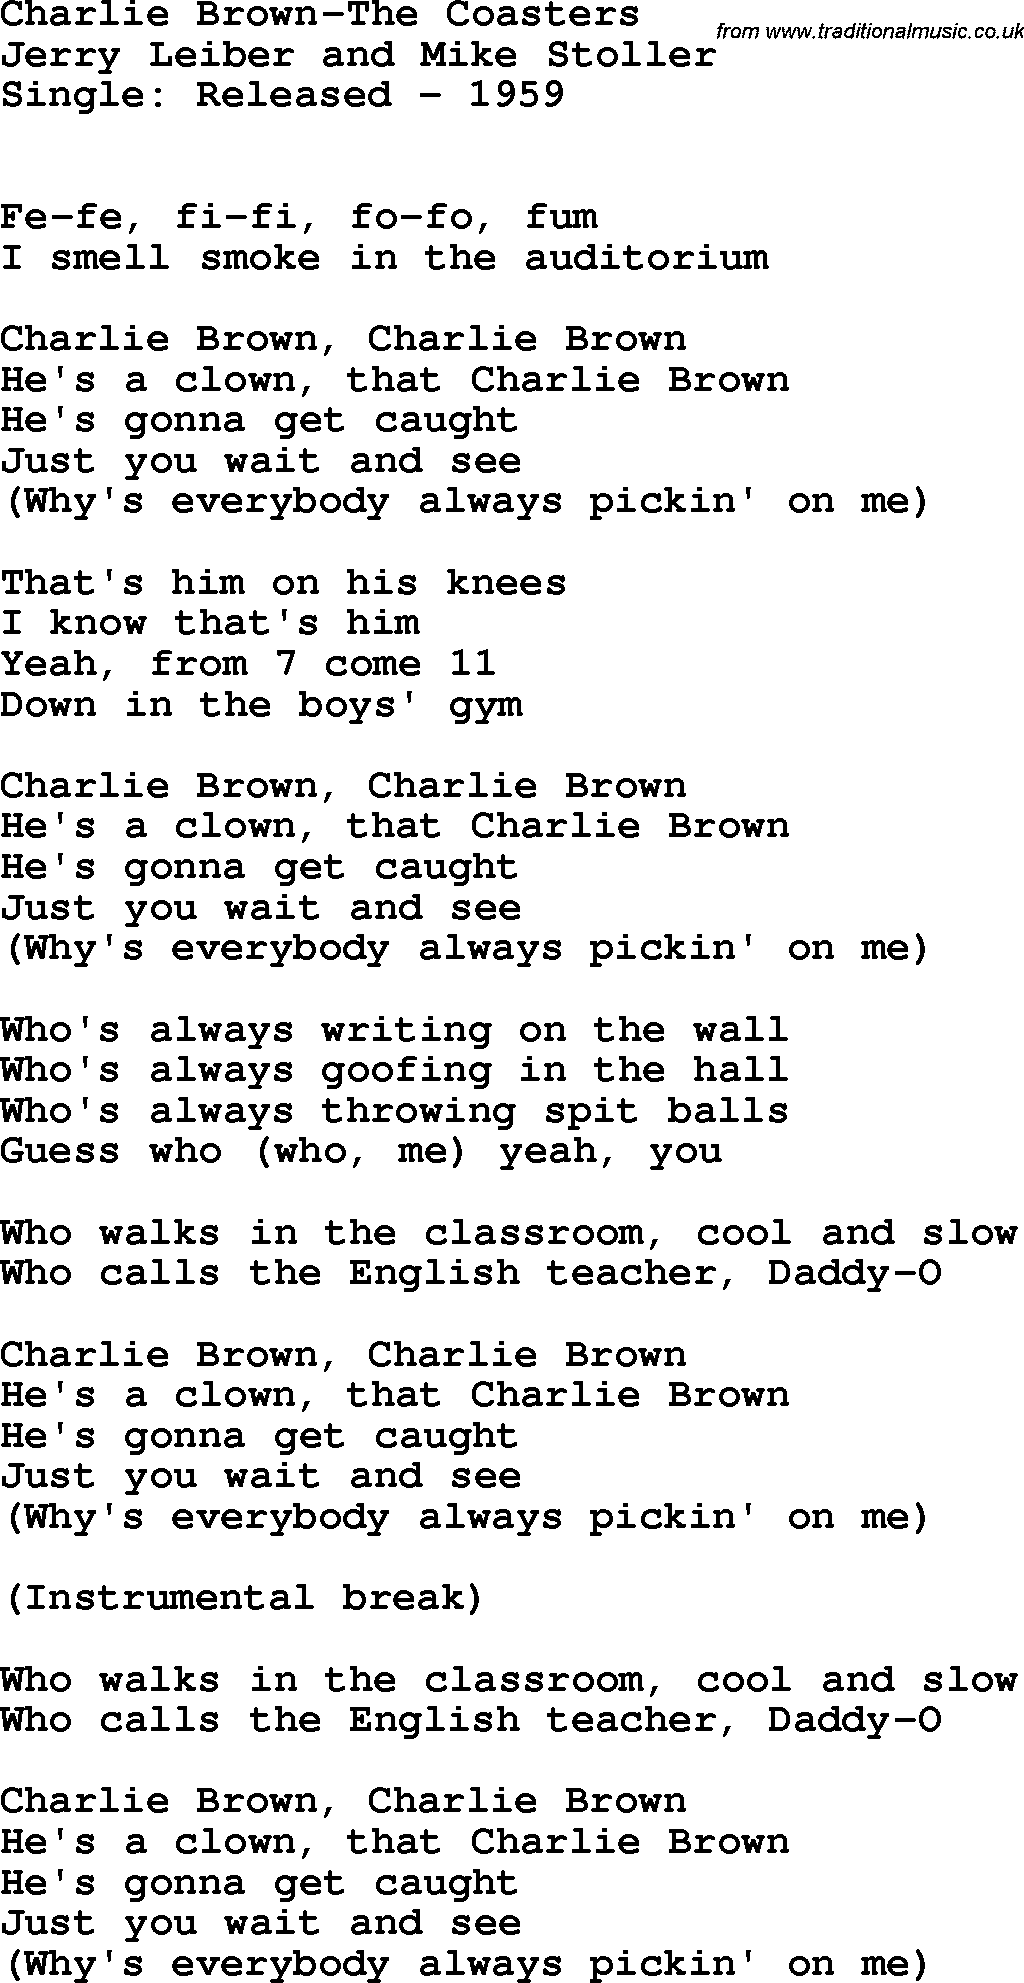 Novelty song: Charlie Brown-The Coasters lyrics